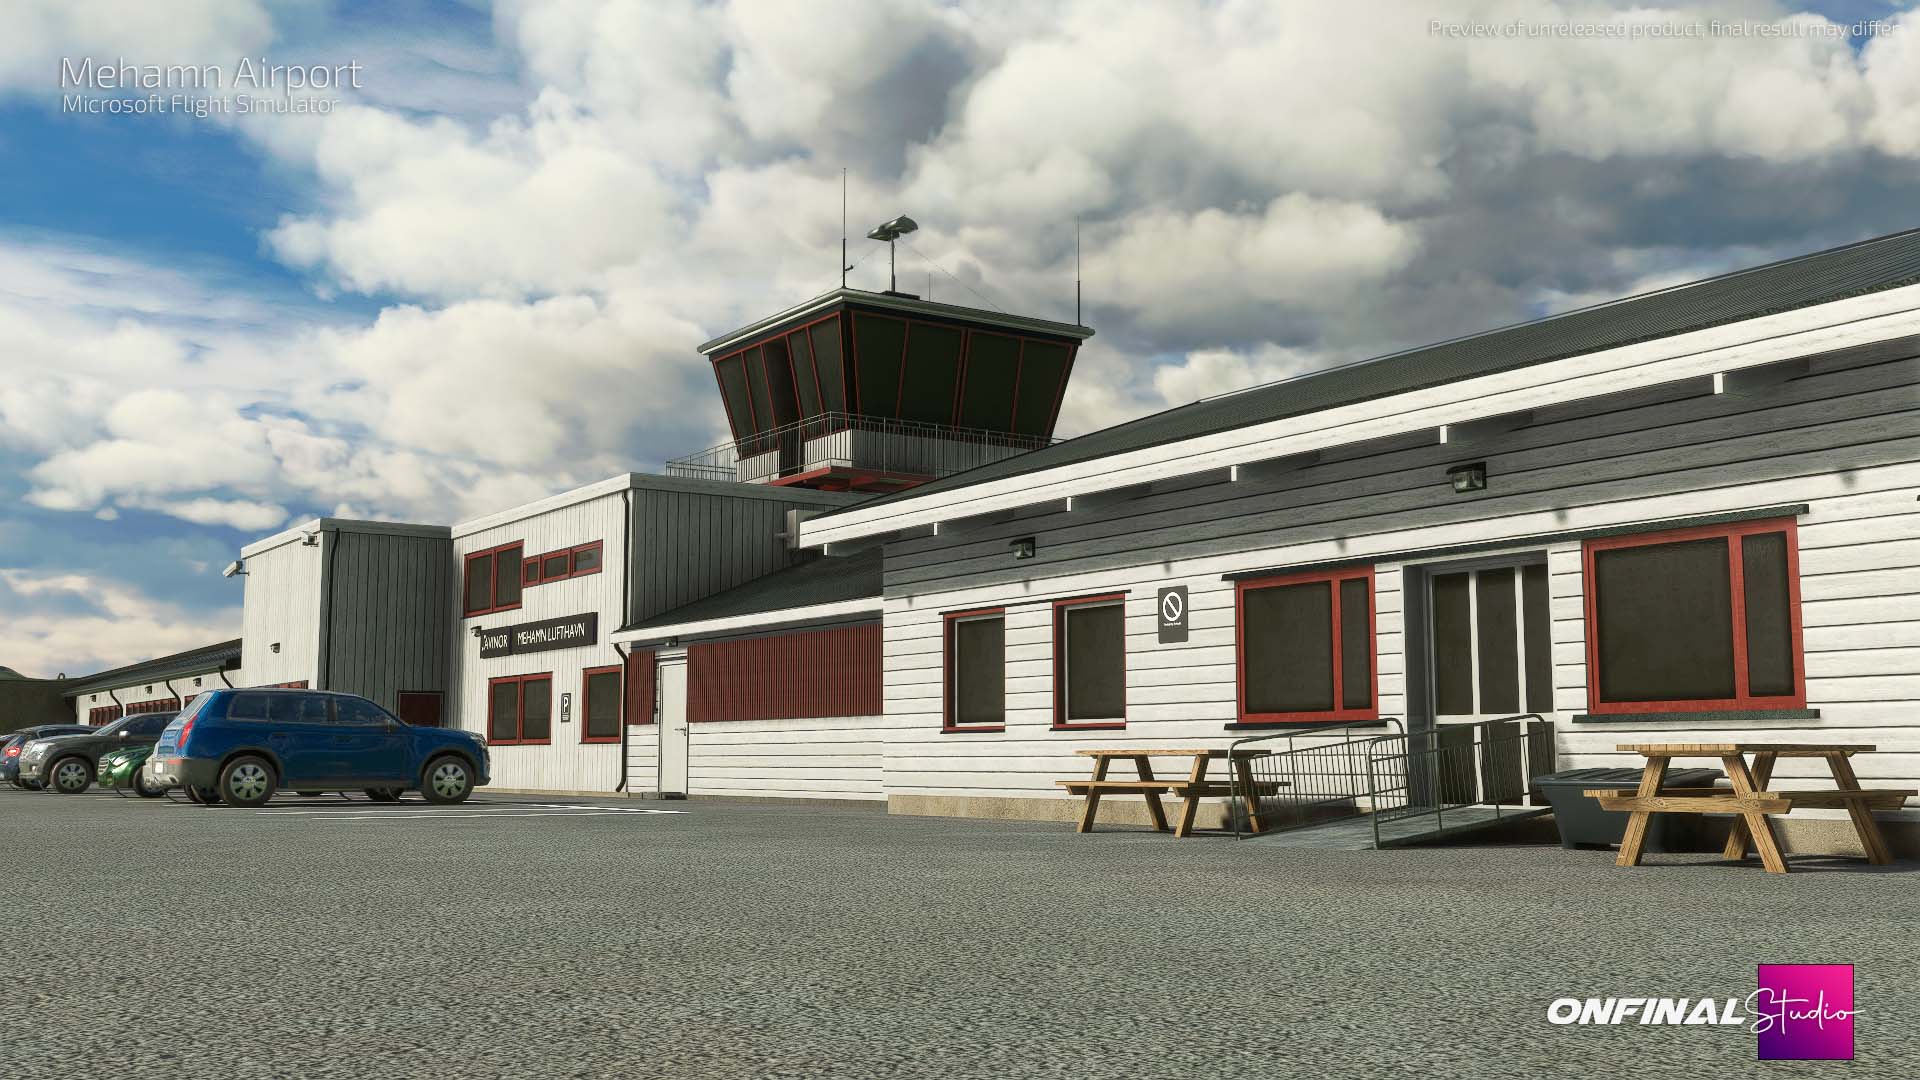 Mehamn Airport ENMH Scenery MSFS 2021 P3D Prepar3d